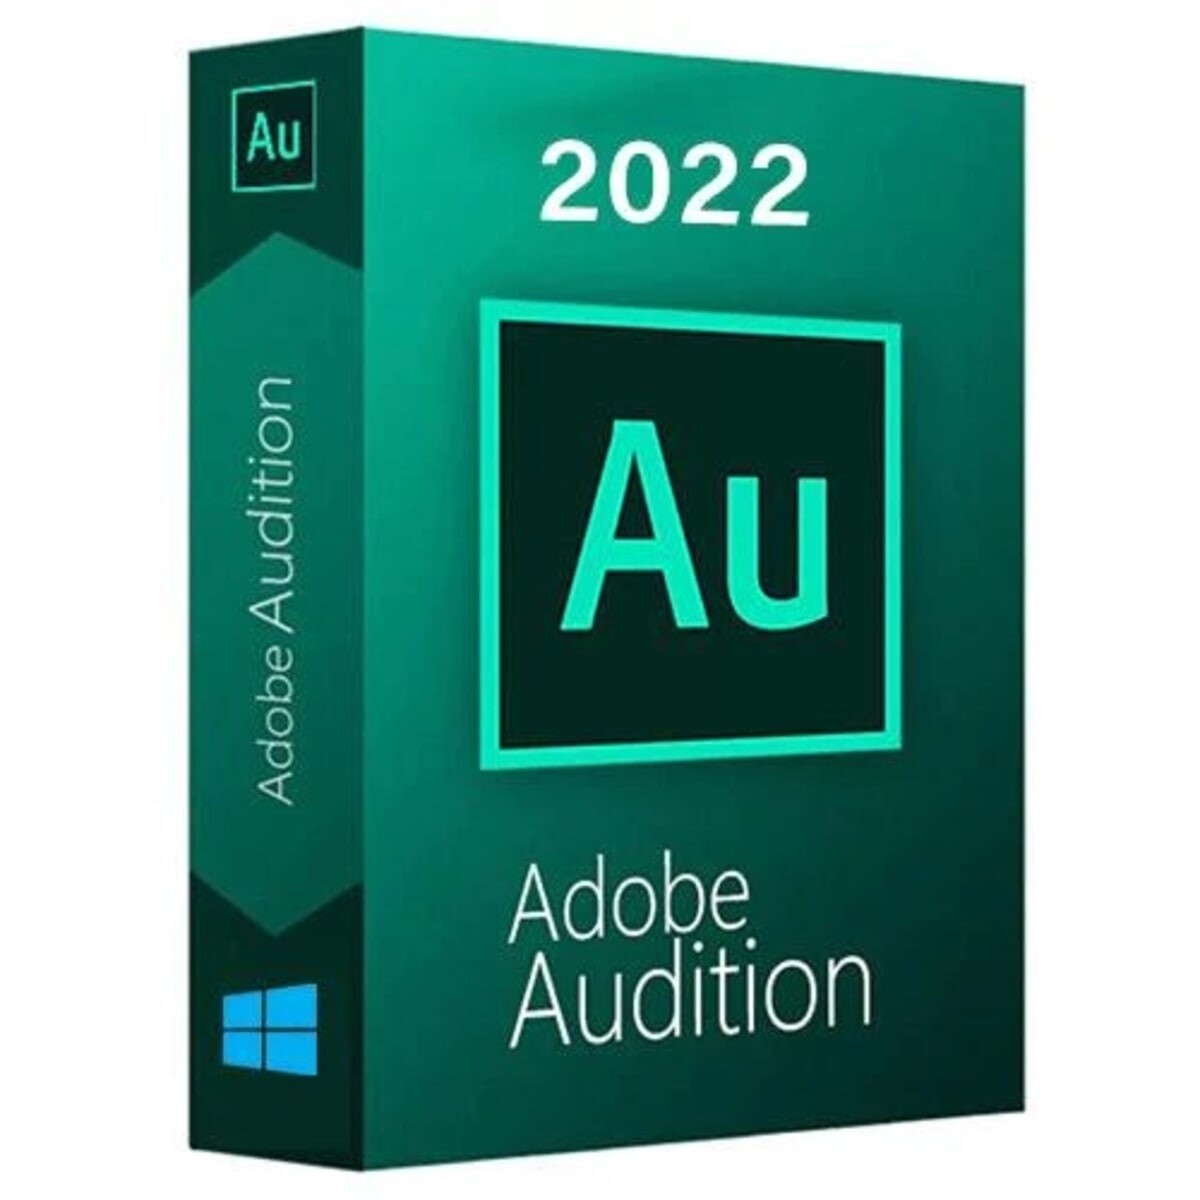 Adobe AUDITION 2022 a VITA 